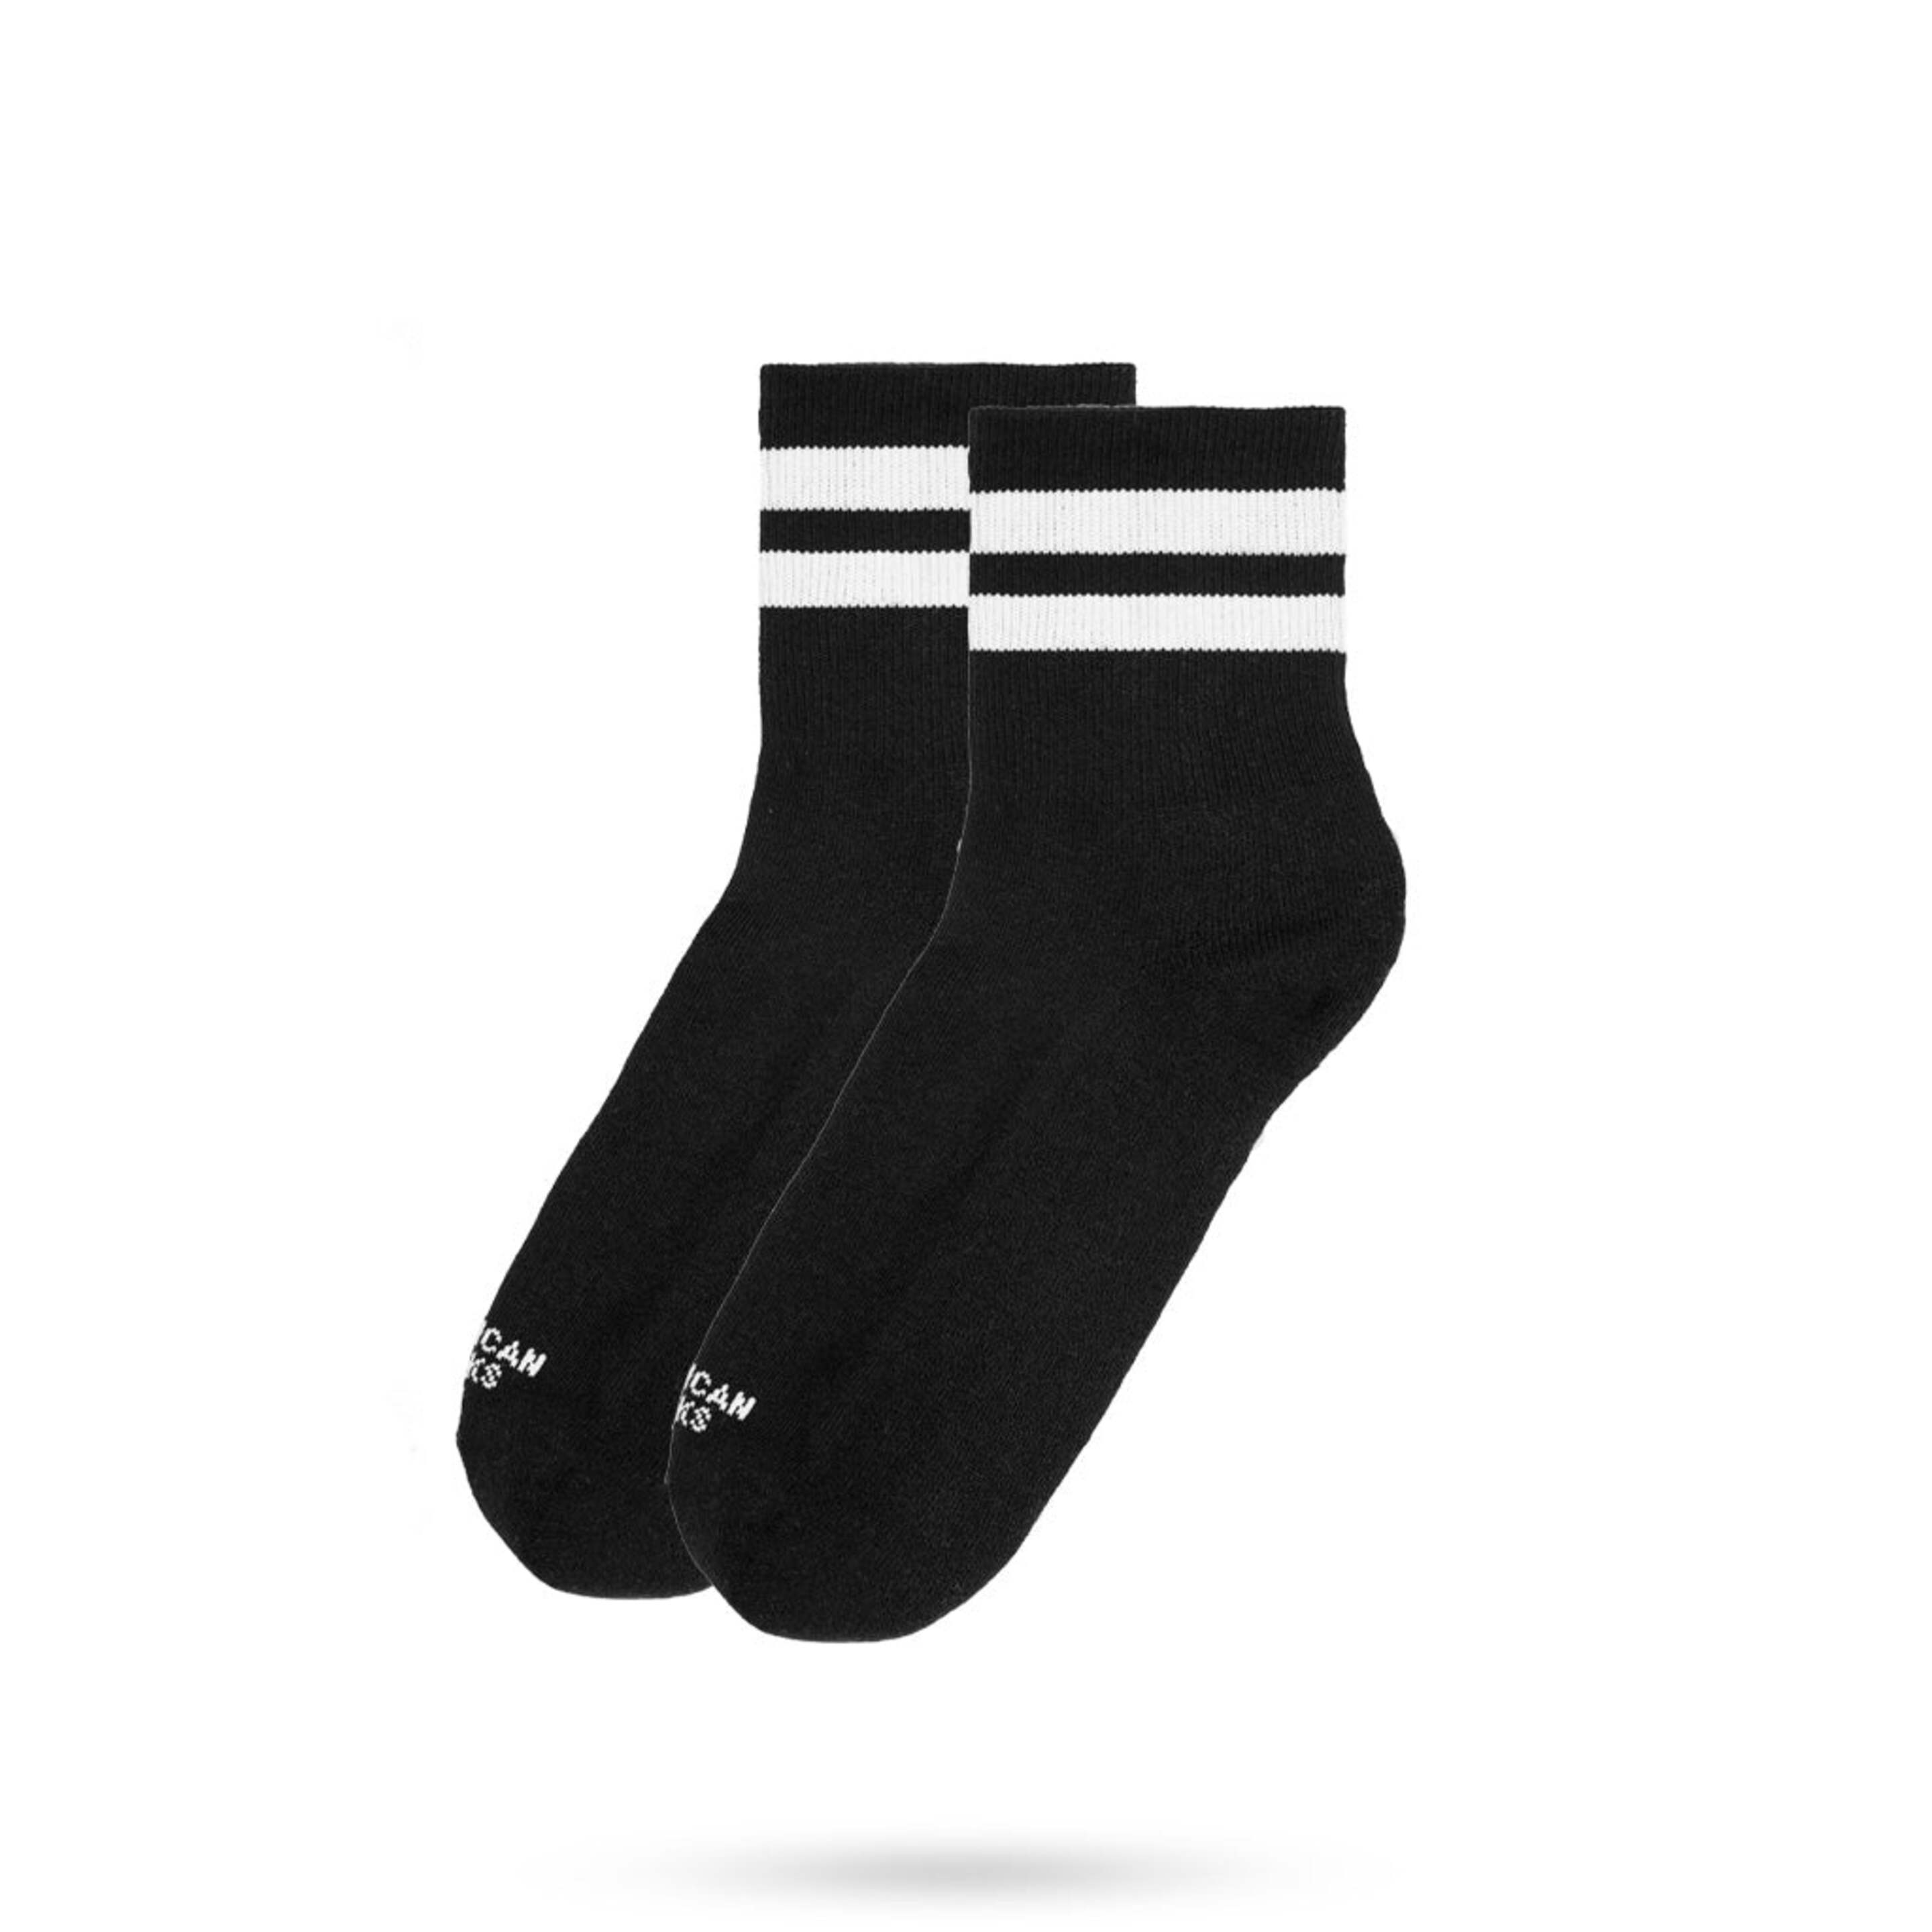 Meias American Socks - Back In Black - Ankle High - negro - 